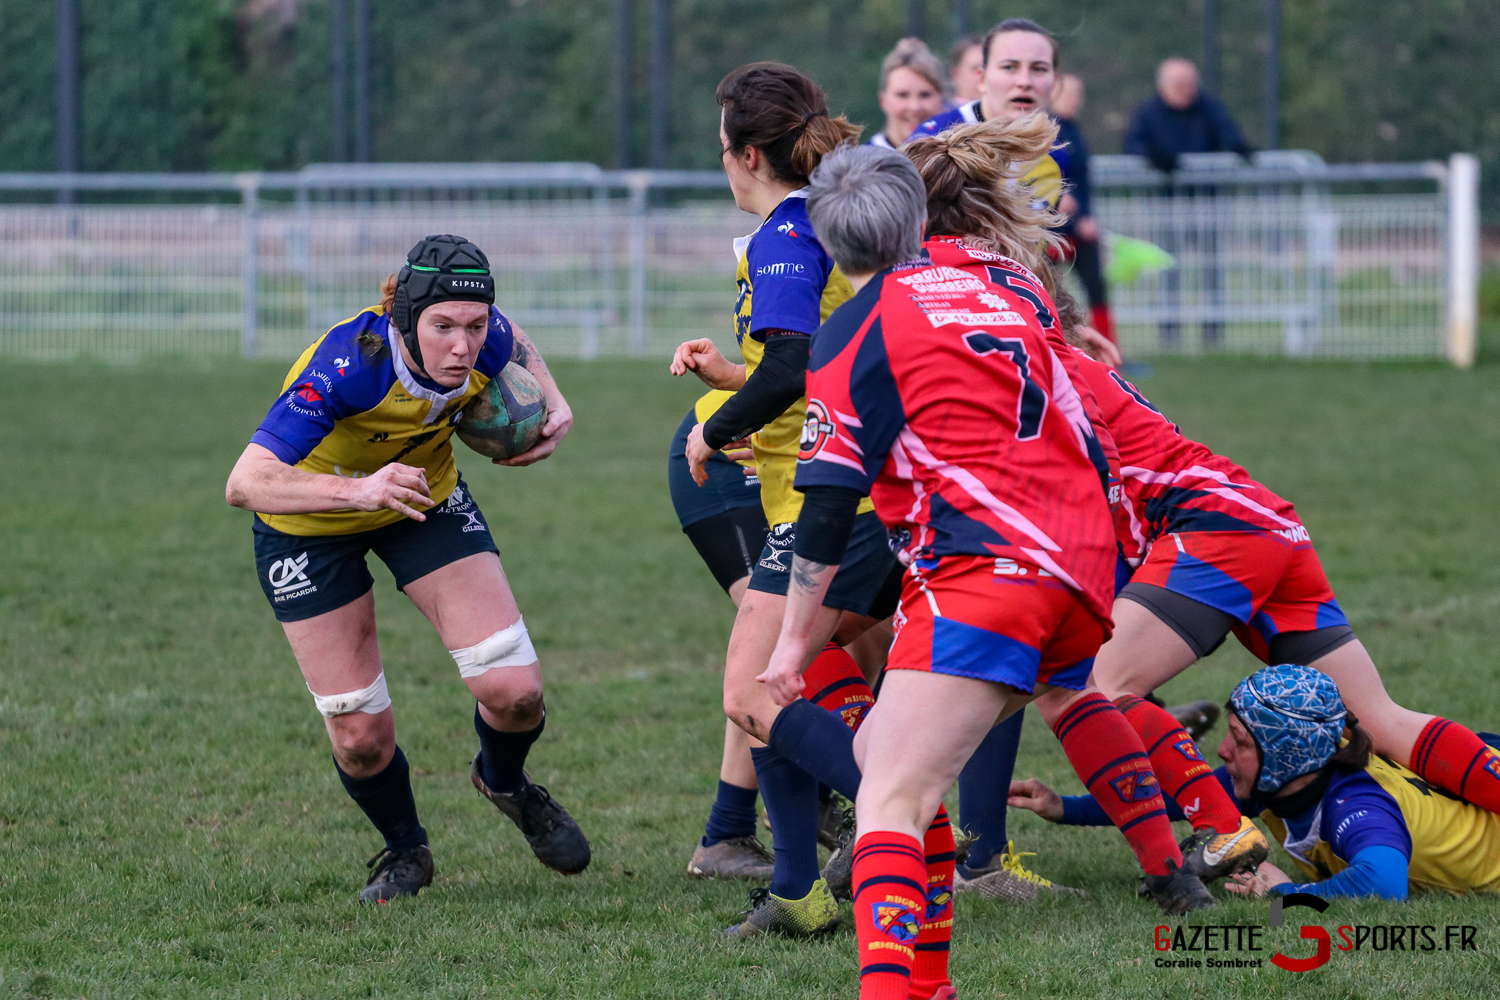 Rugby Feminin Rca Vs Armentière Gazettesports Coralie Sombret 26